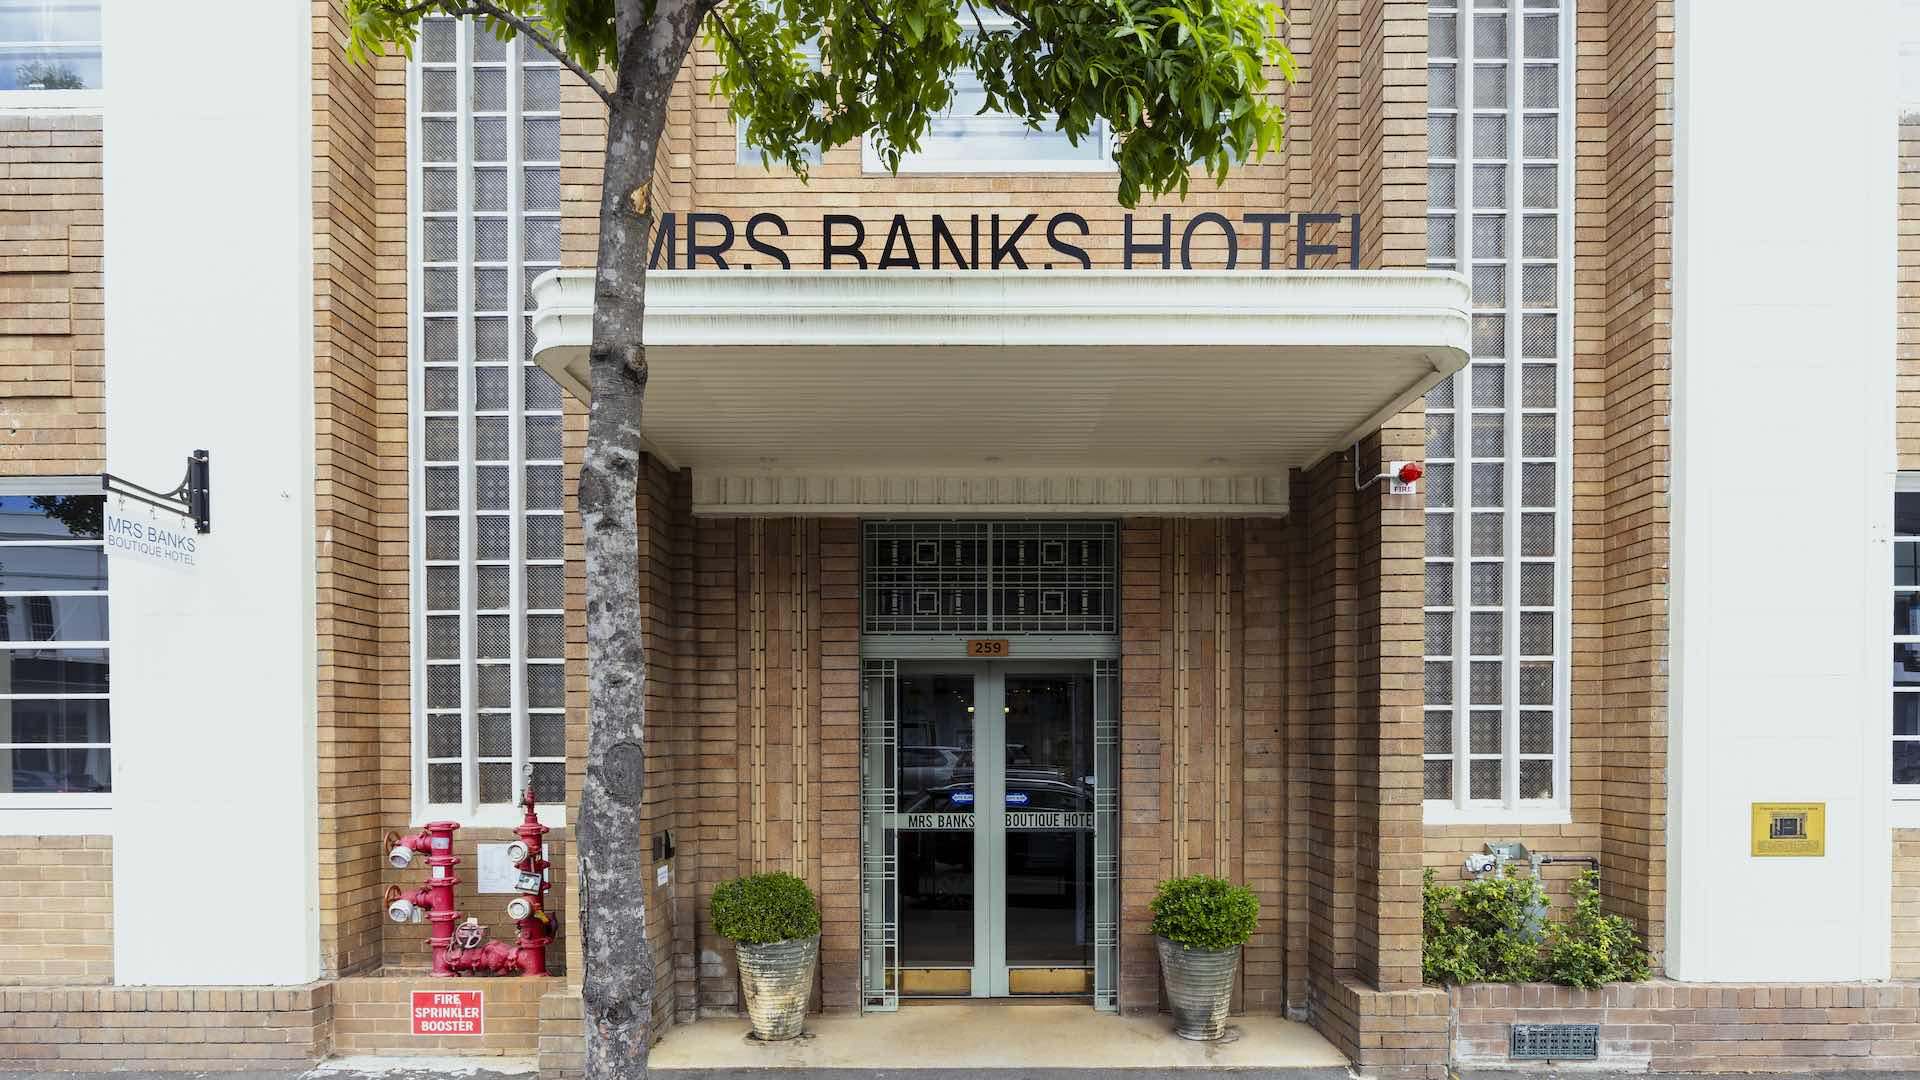 Mrs Banks Hotel